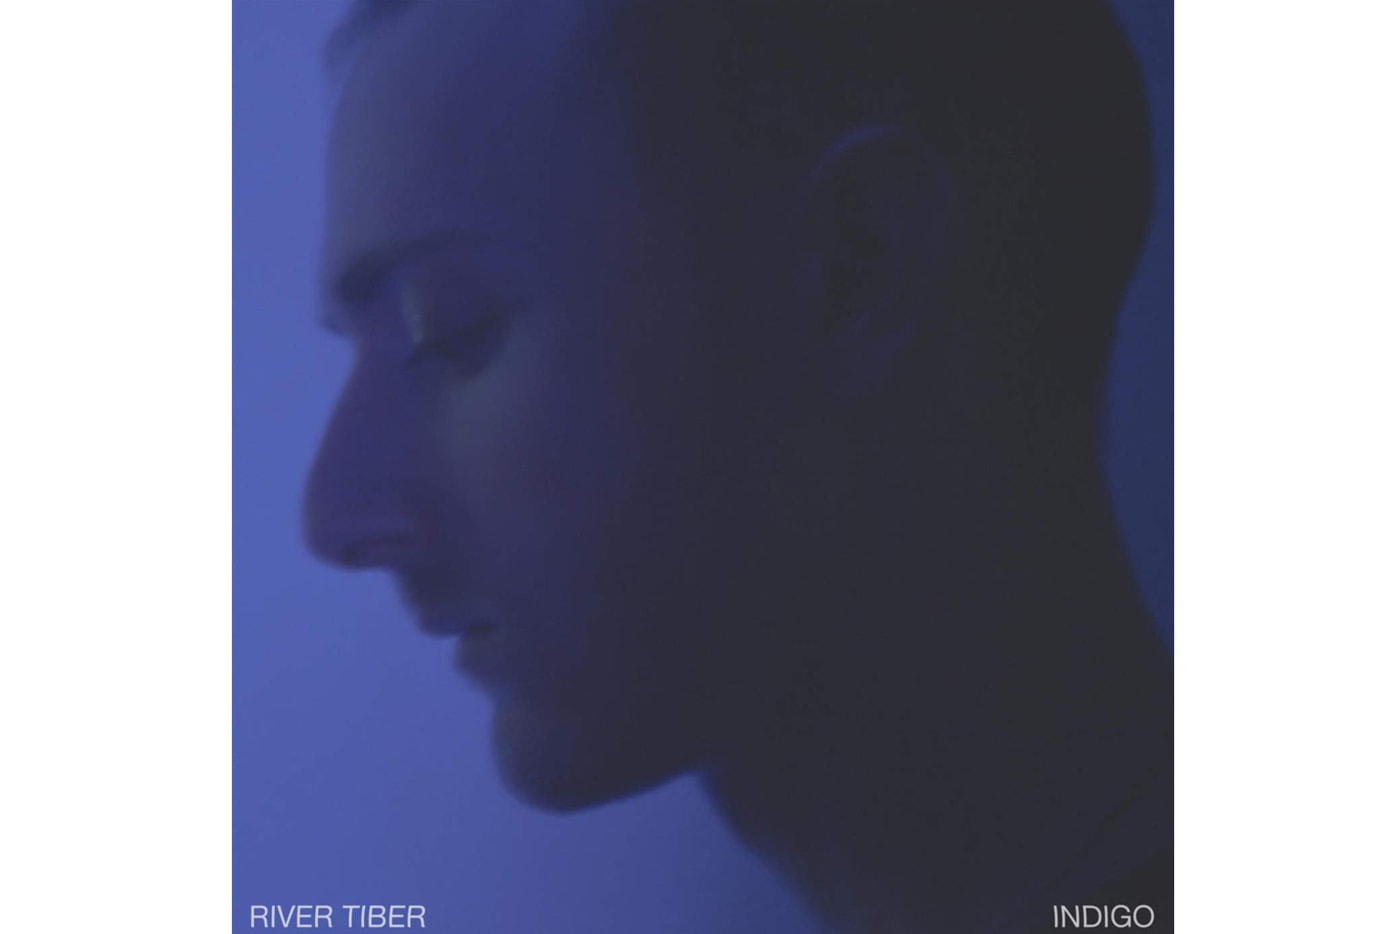 river-tiber-indigo-stream-apple-music